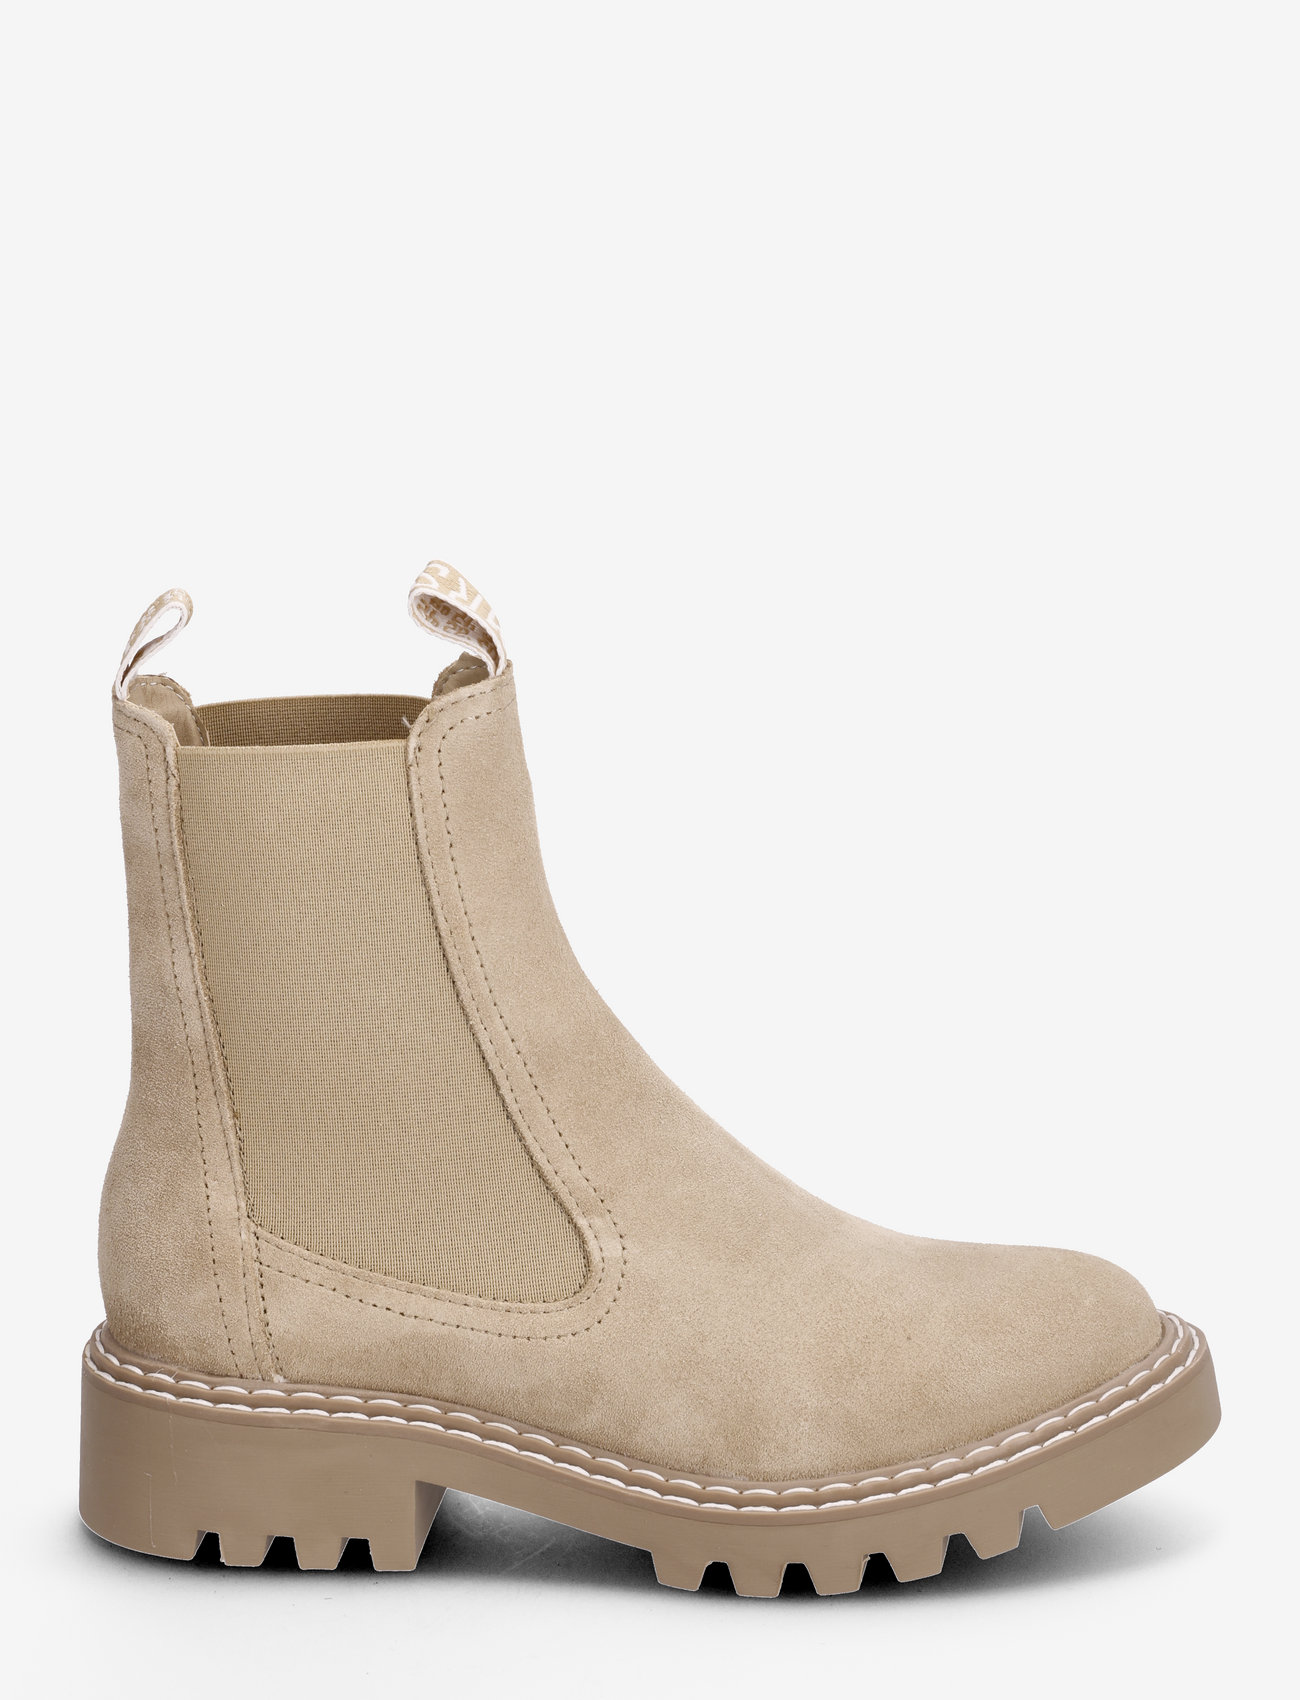 Tamaris - Women Boots - flache stiefeletten - beige suede - 1